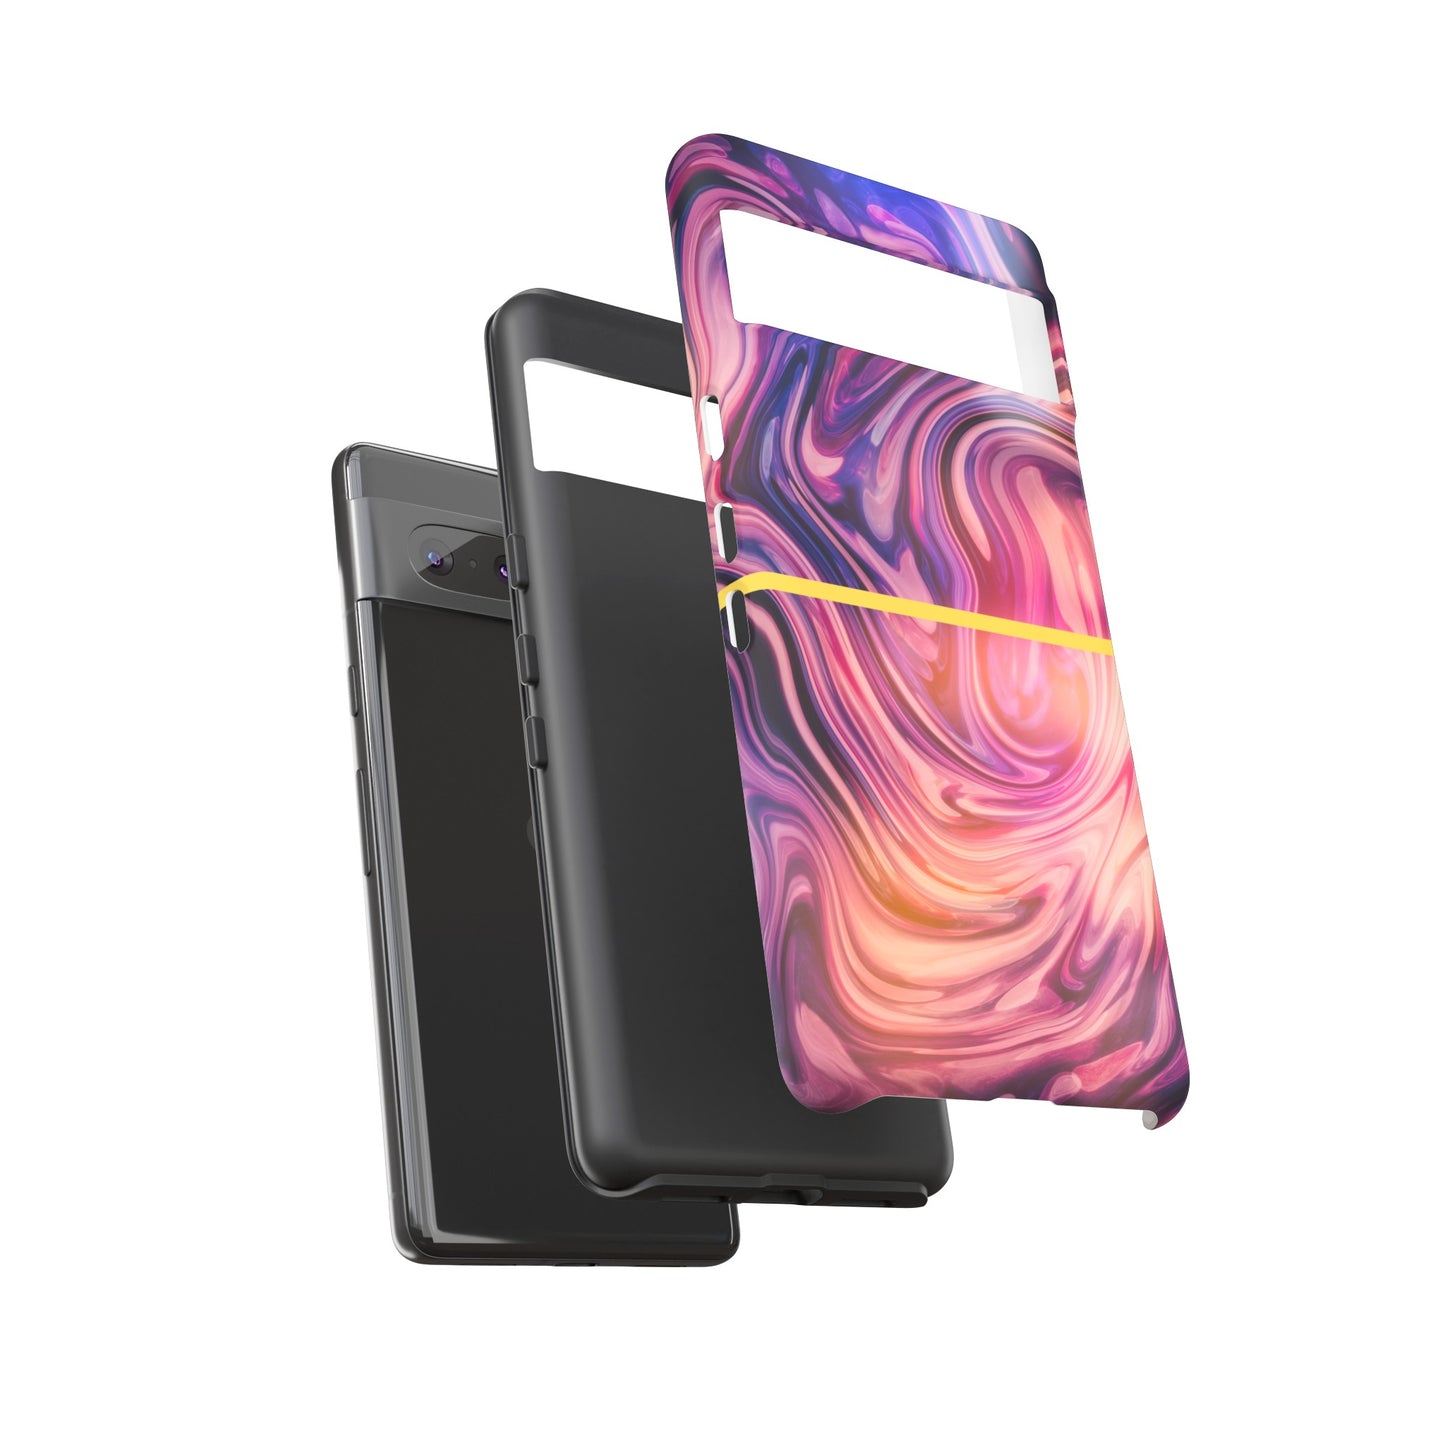 Nebula Swirl - Cell Phone Case